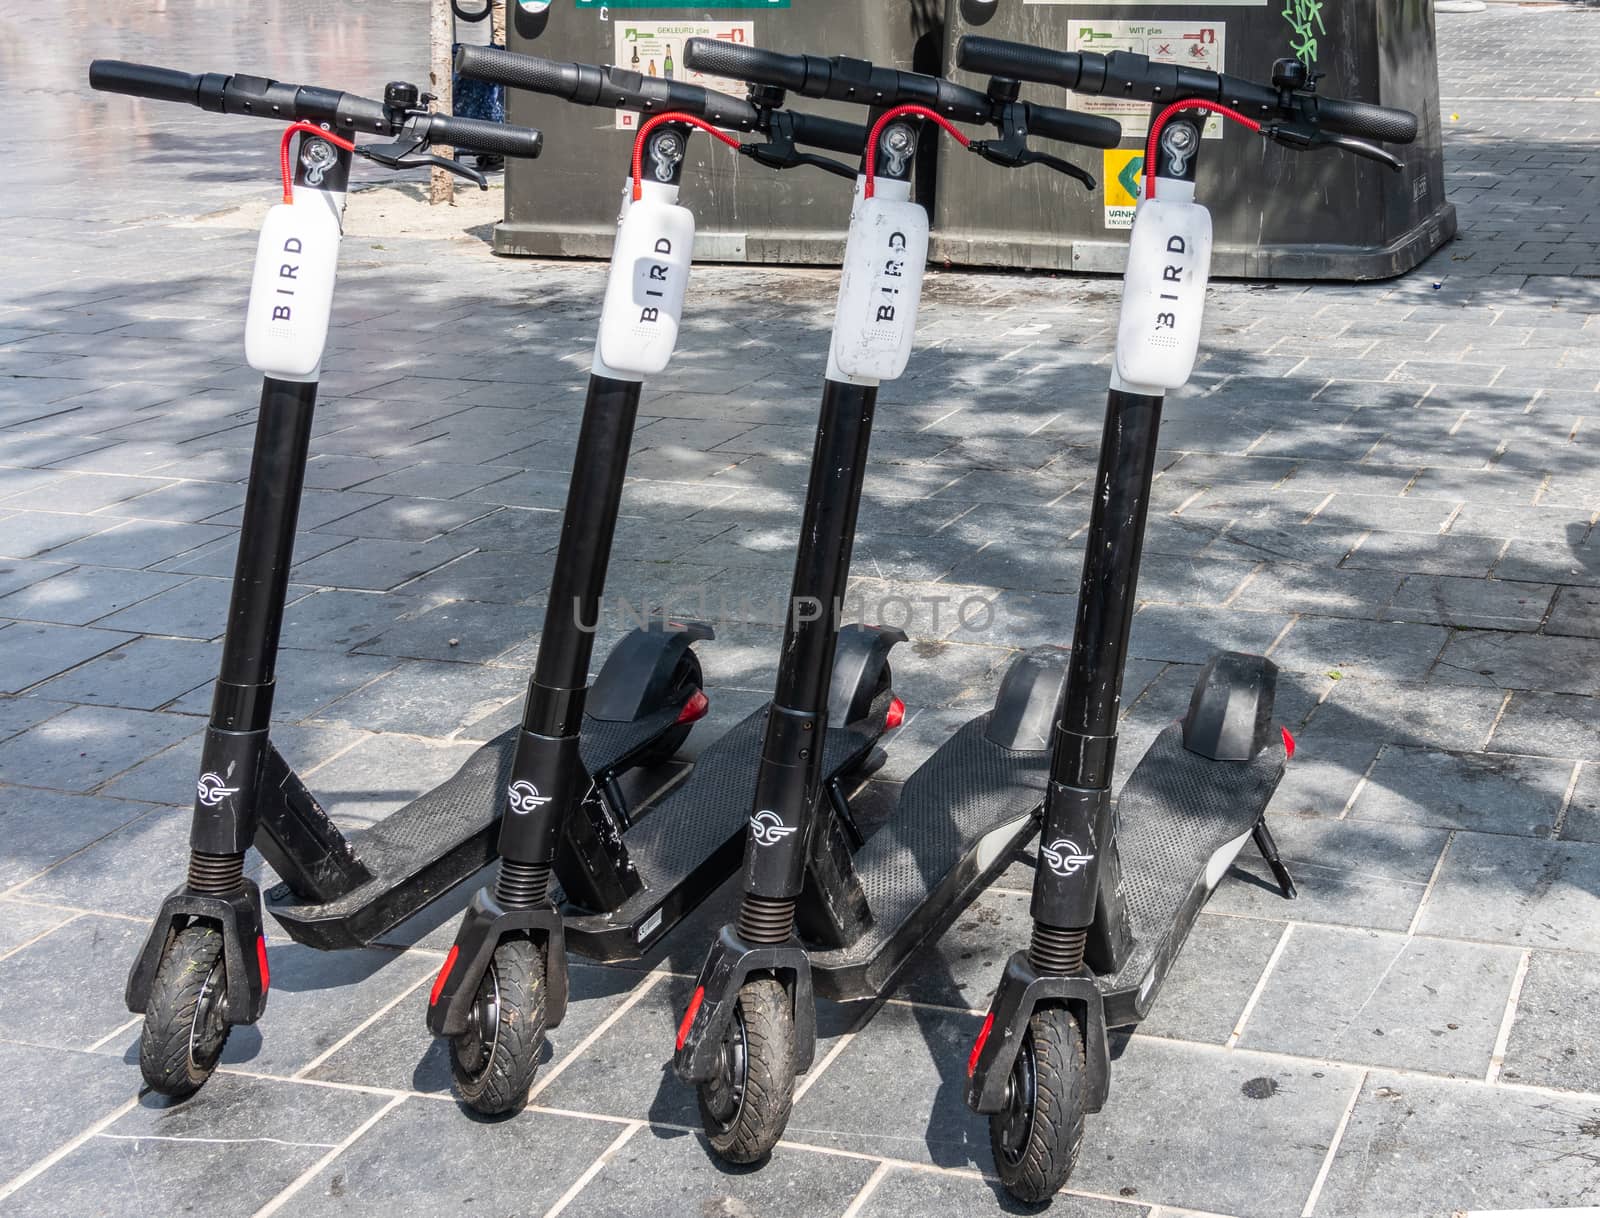 Antwerpen, Belgium - June 23, 2019: Closeup of four black Bird scooters parked on gray pavement.